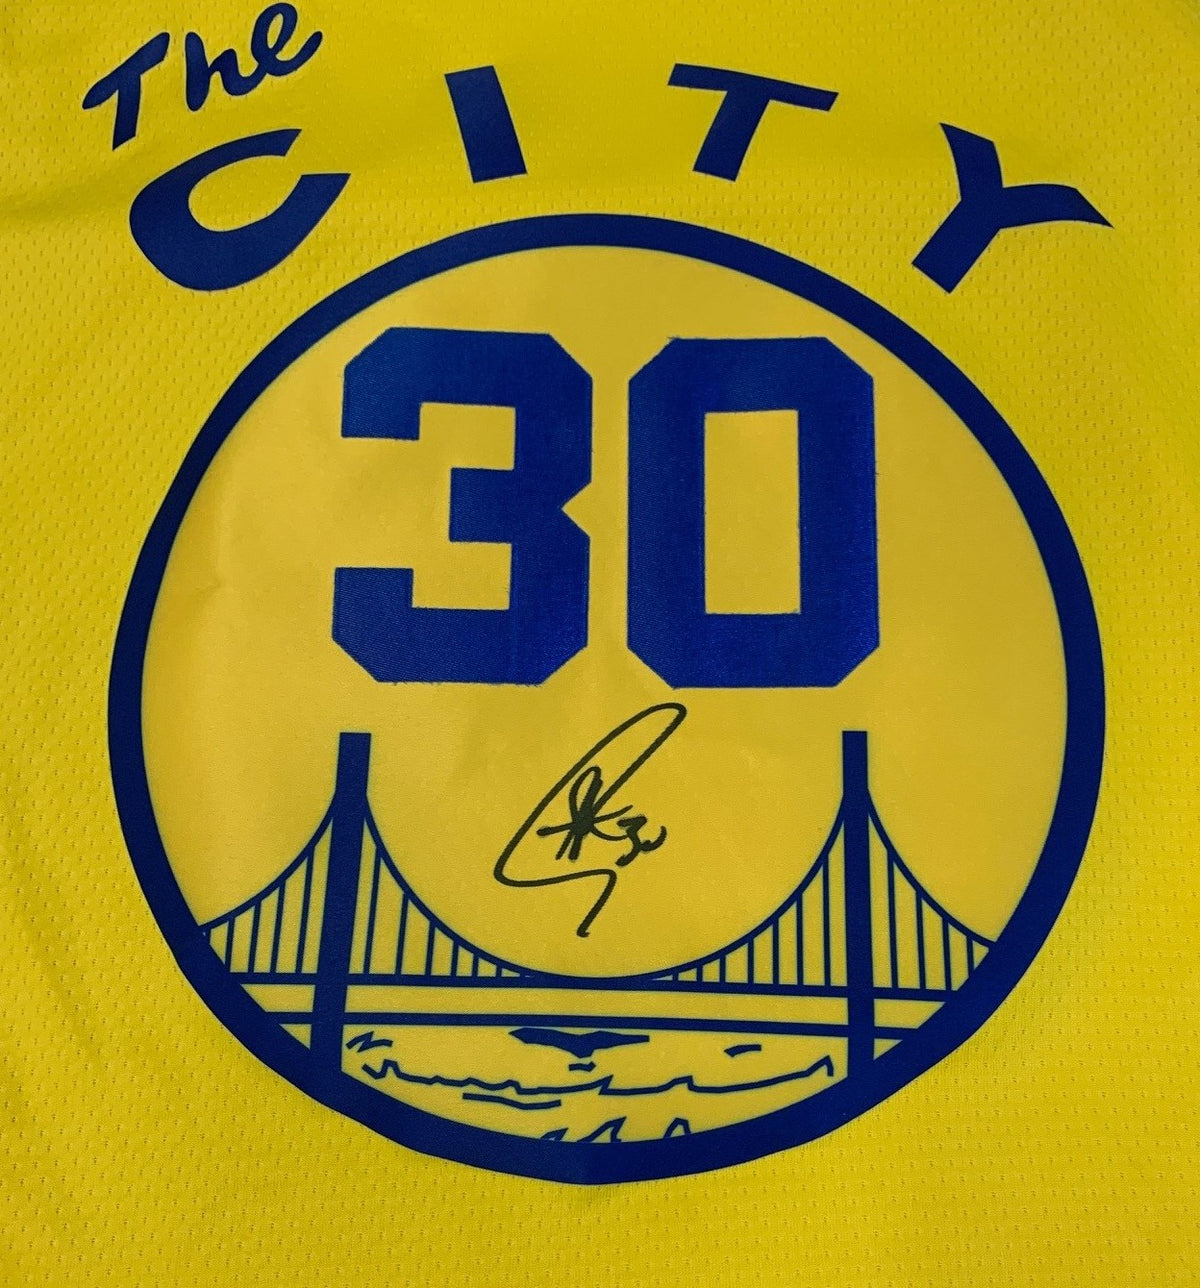 LARRY BIRD (Boston Celtics) signed jersey, Custom Jersey - Sport  Memorabilia: signierte Fanartikel und Autogramme eurer Stars